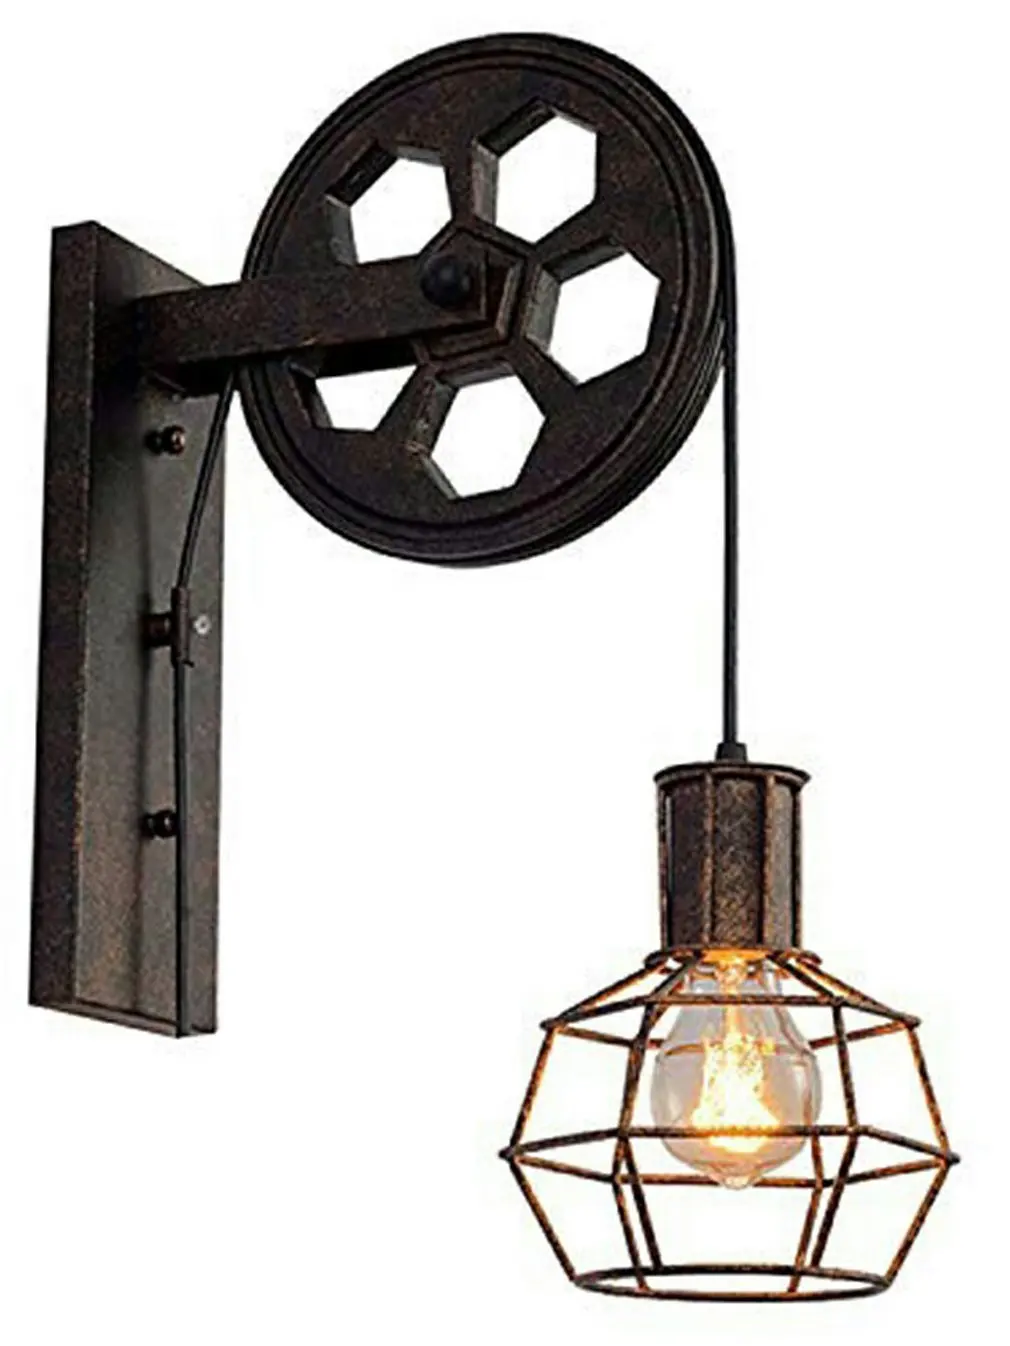 

Retro Vintage Wall Light Industrial Wall Lamp Shade Fixture Iron Loft Cafe Bar Adjustable Sconce Lights Wandlamp Decoration LED